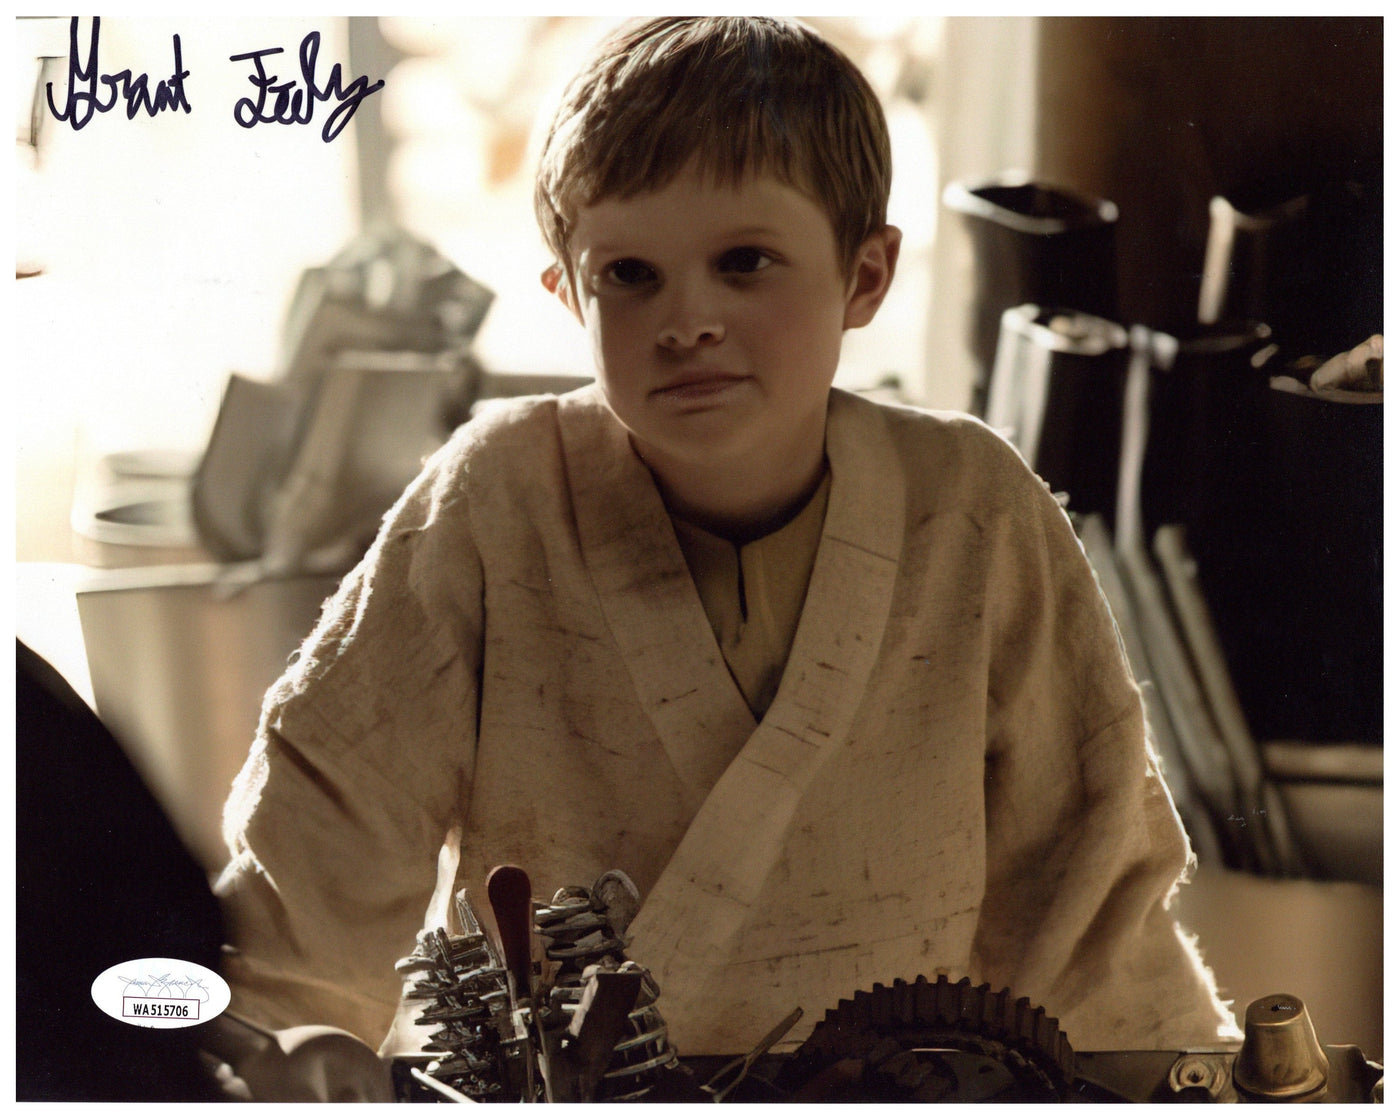 Grant Feely Signed 8x10 Photo Star Wars Obi-Wan-Kenobi Autographed JSA COA